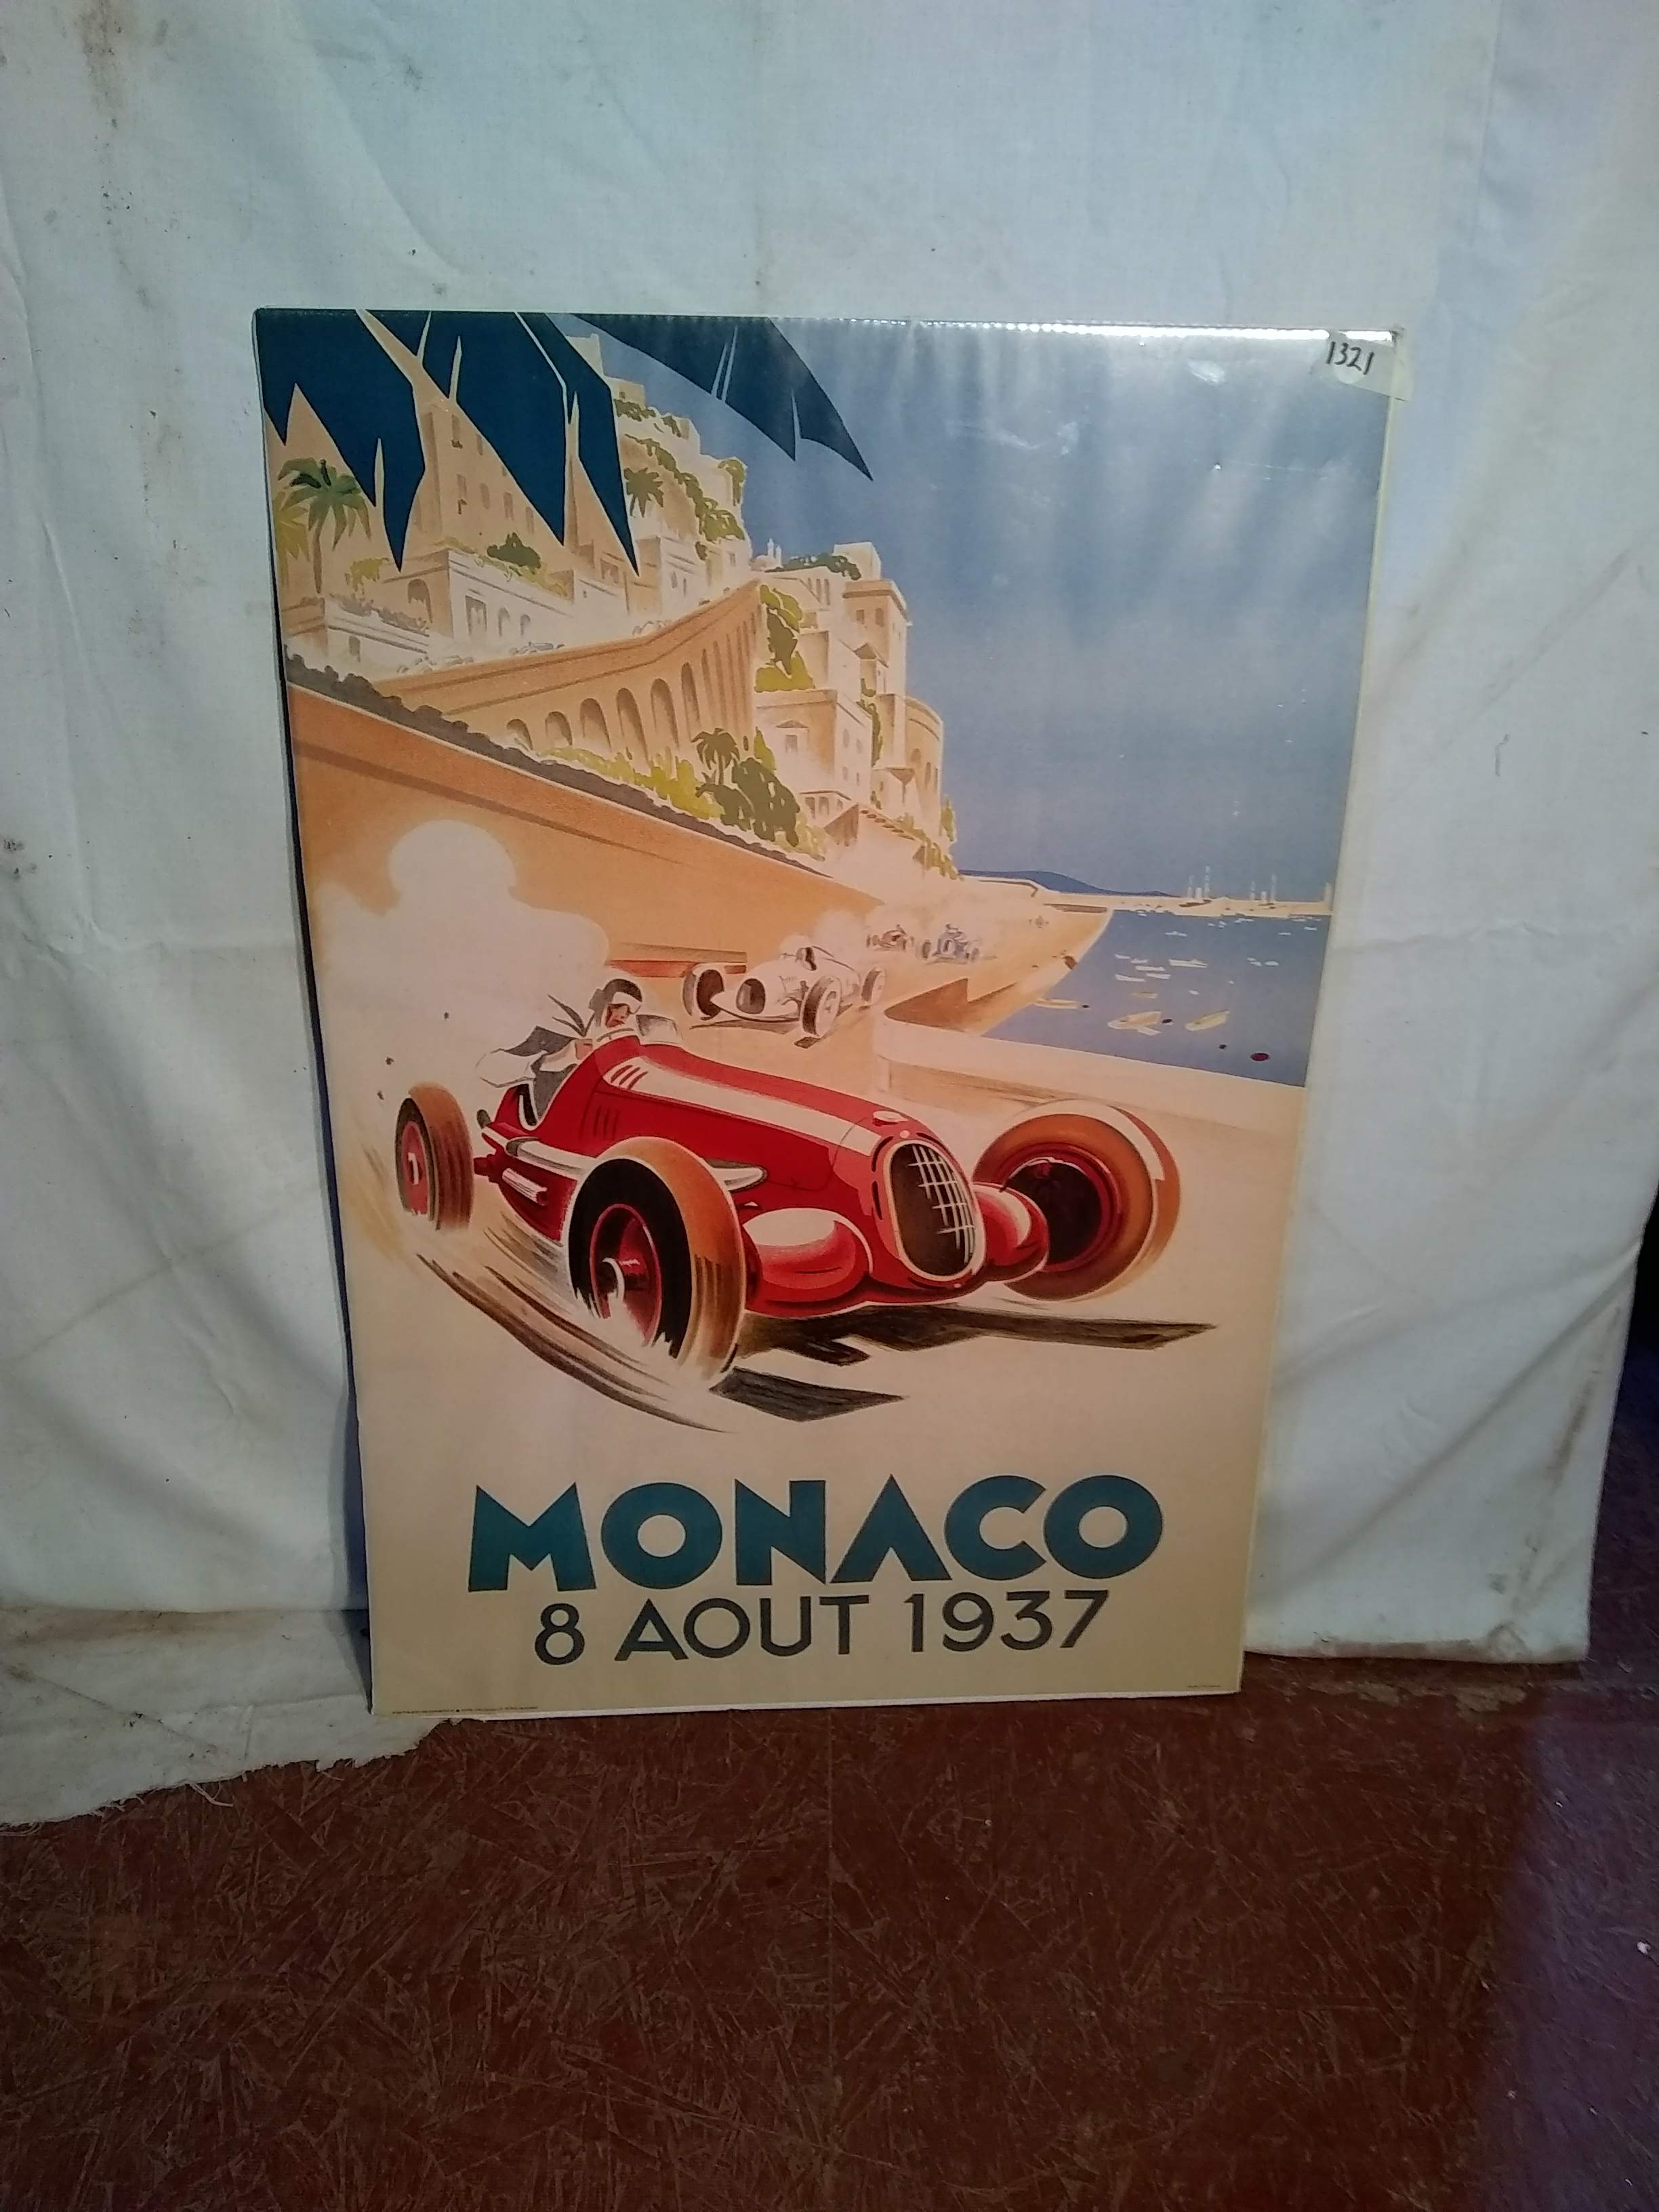 1937 Monaco Poster, Monaco Poster